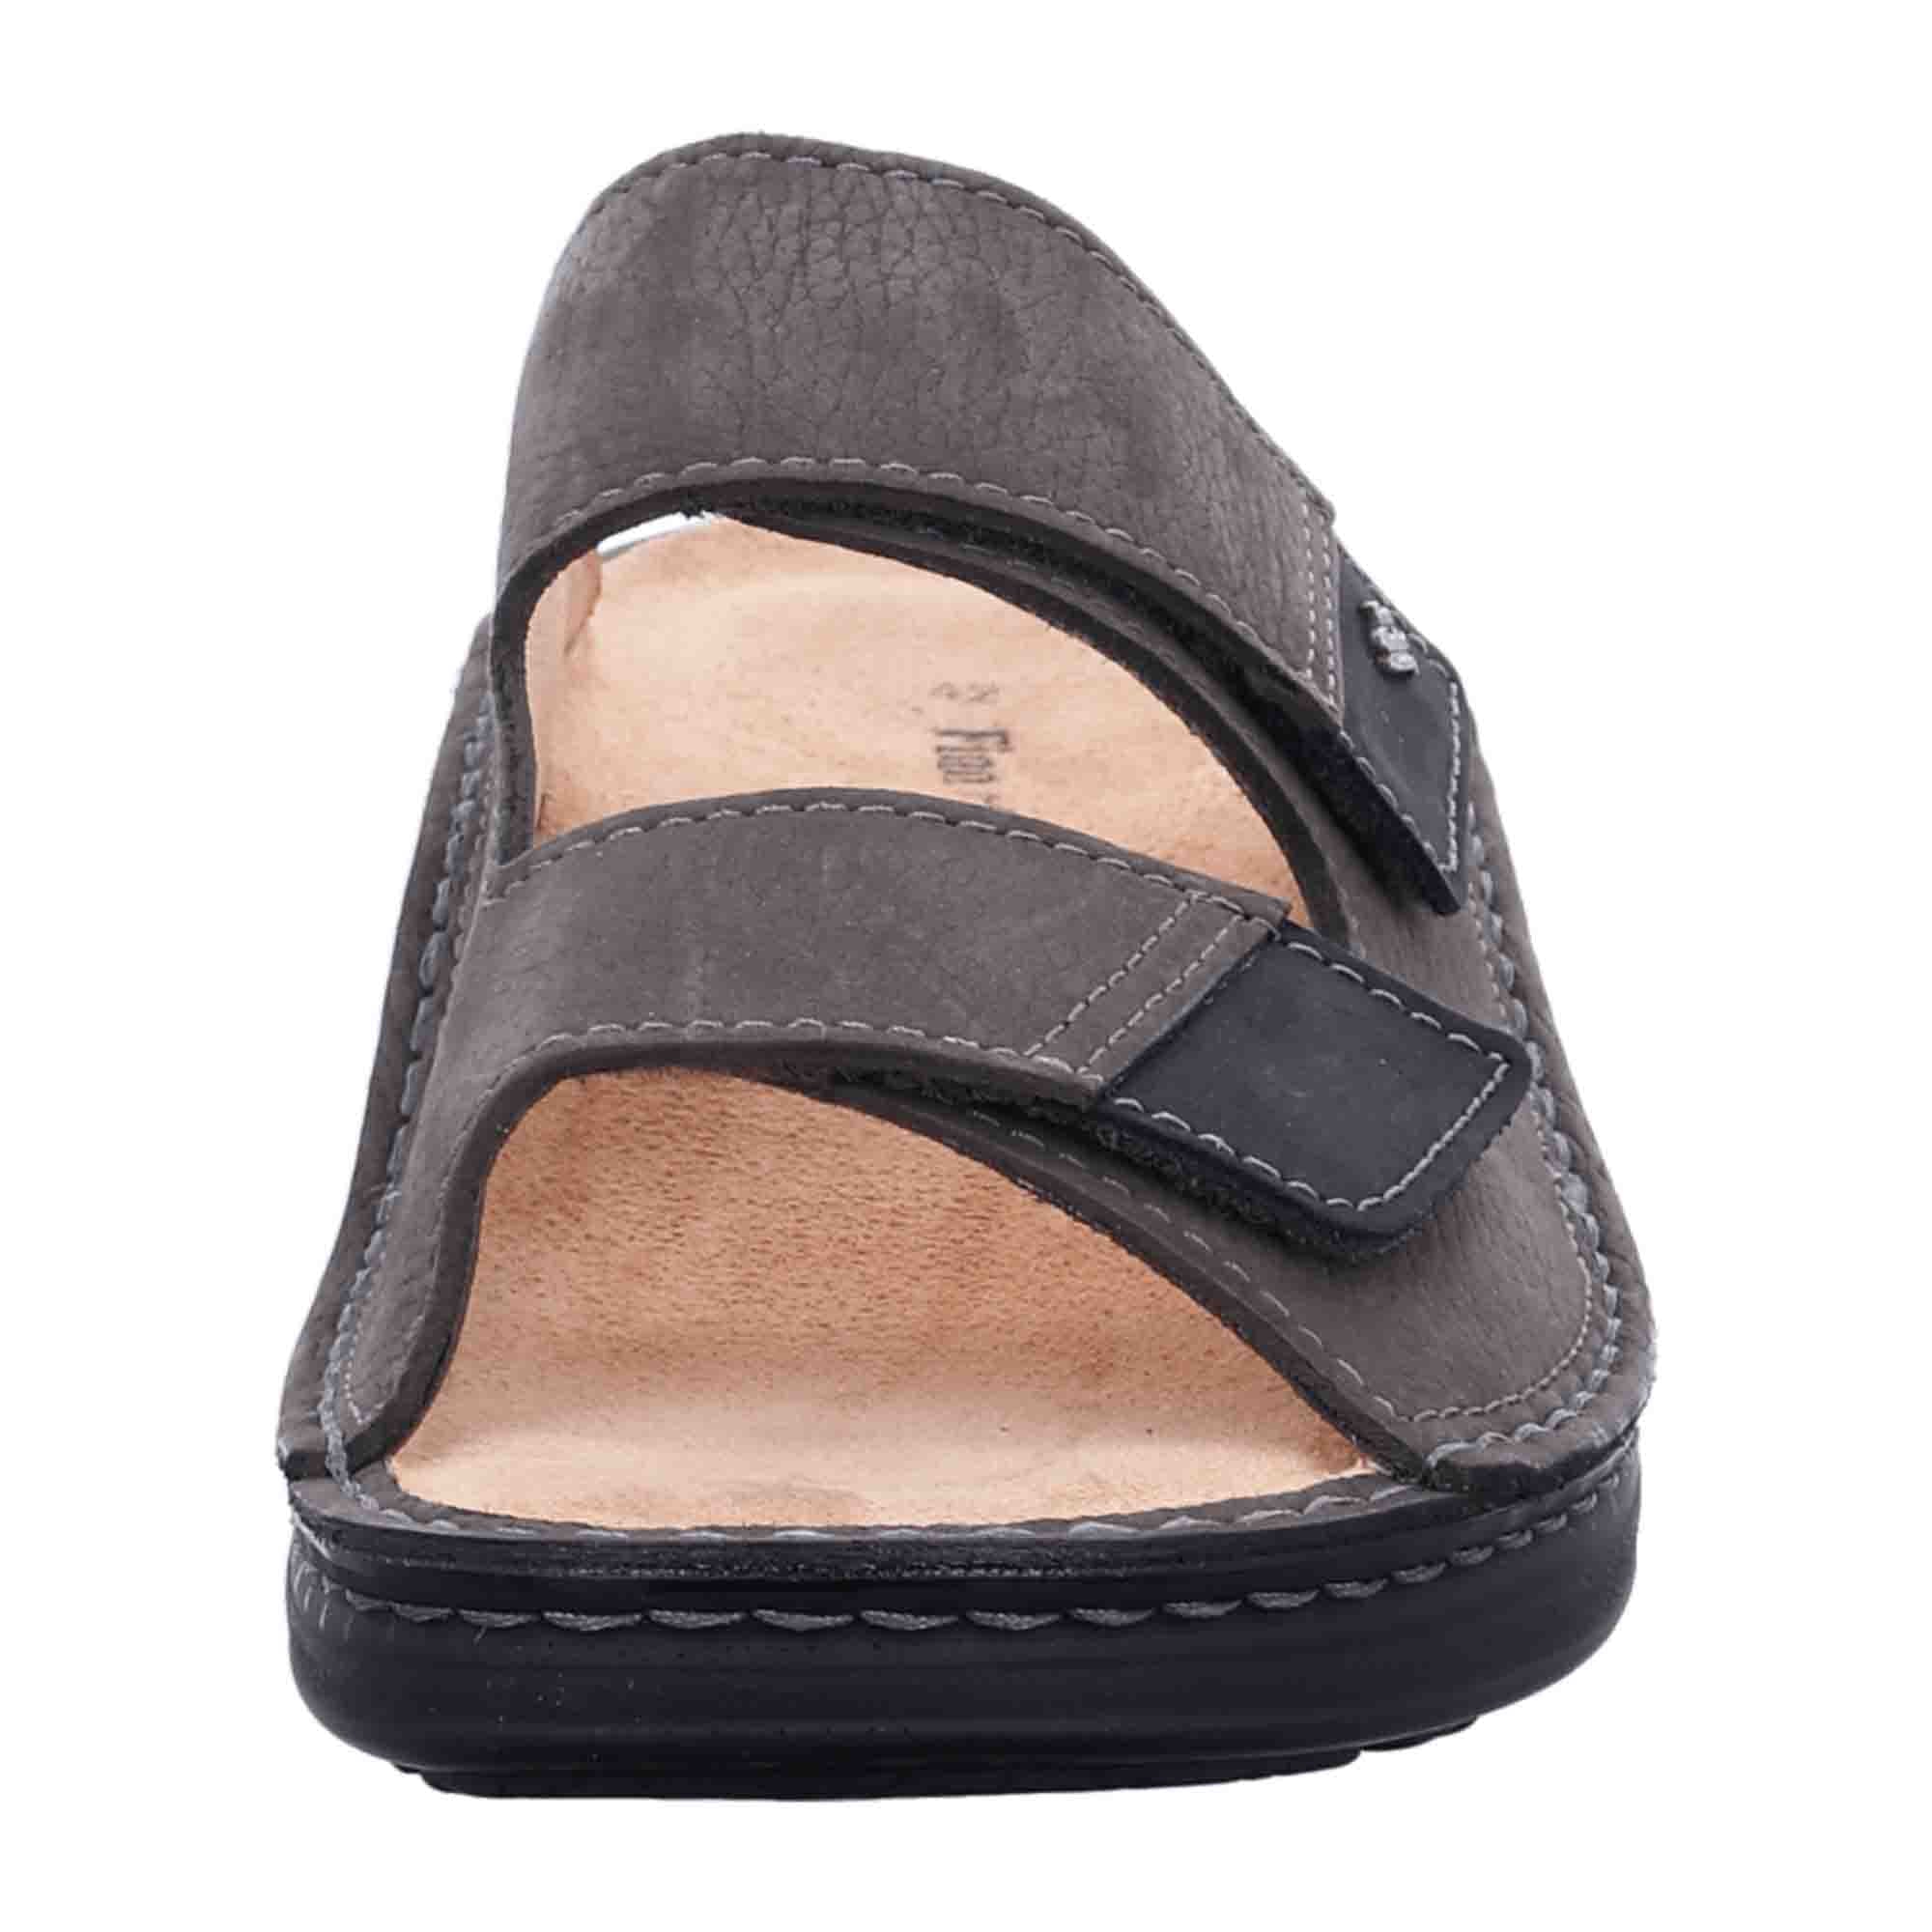 Finn Comfort Psara Men's Slides - Grey/Black Comfort Leather Sandals